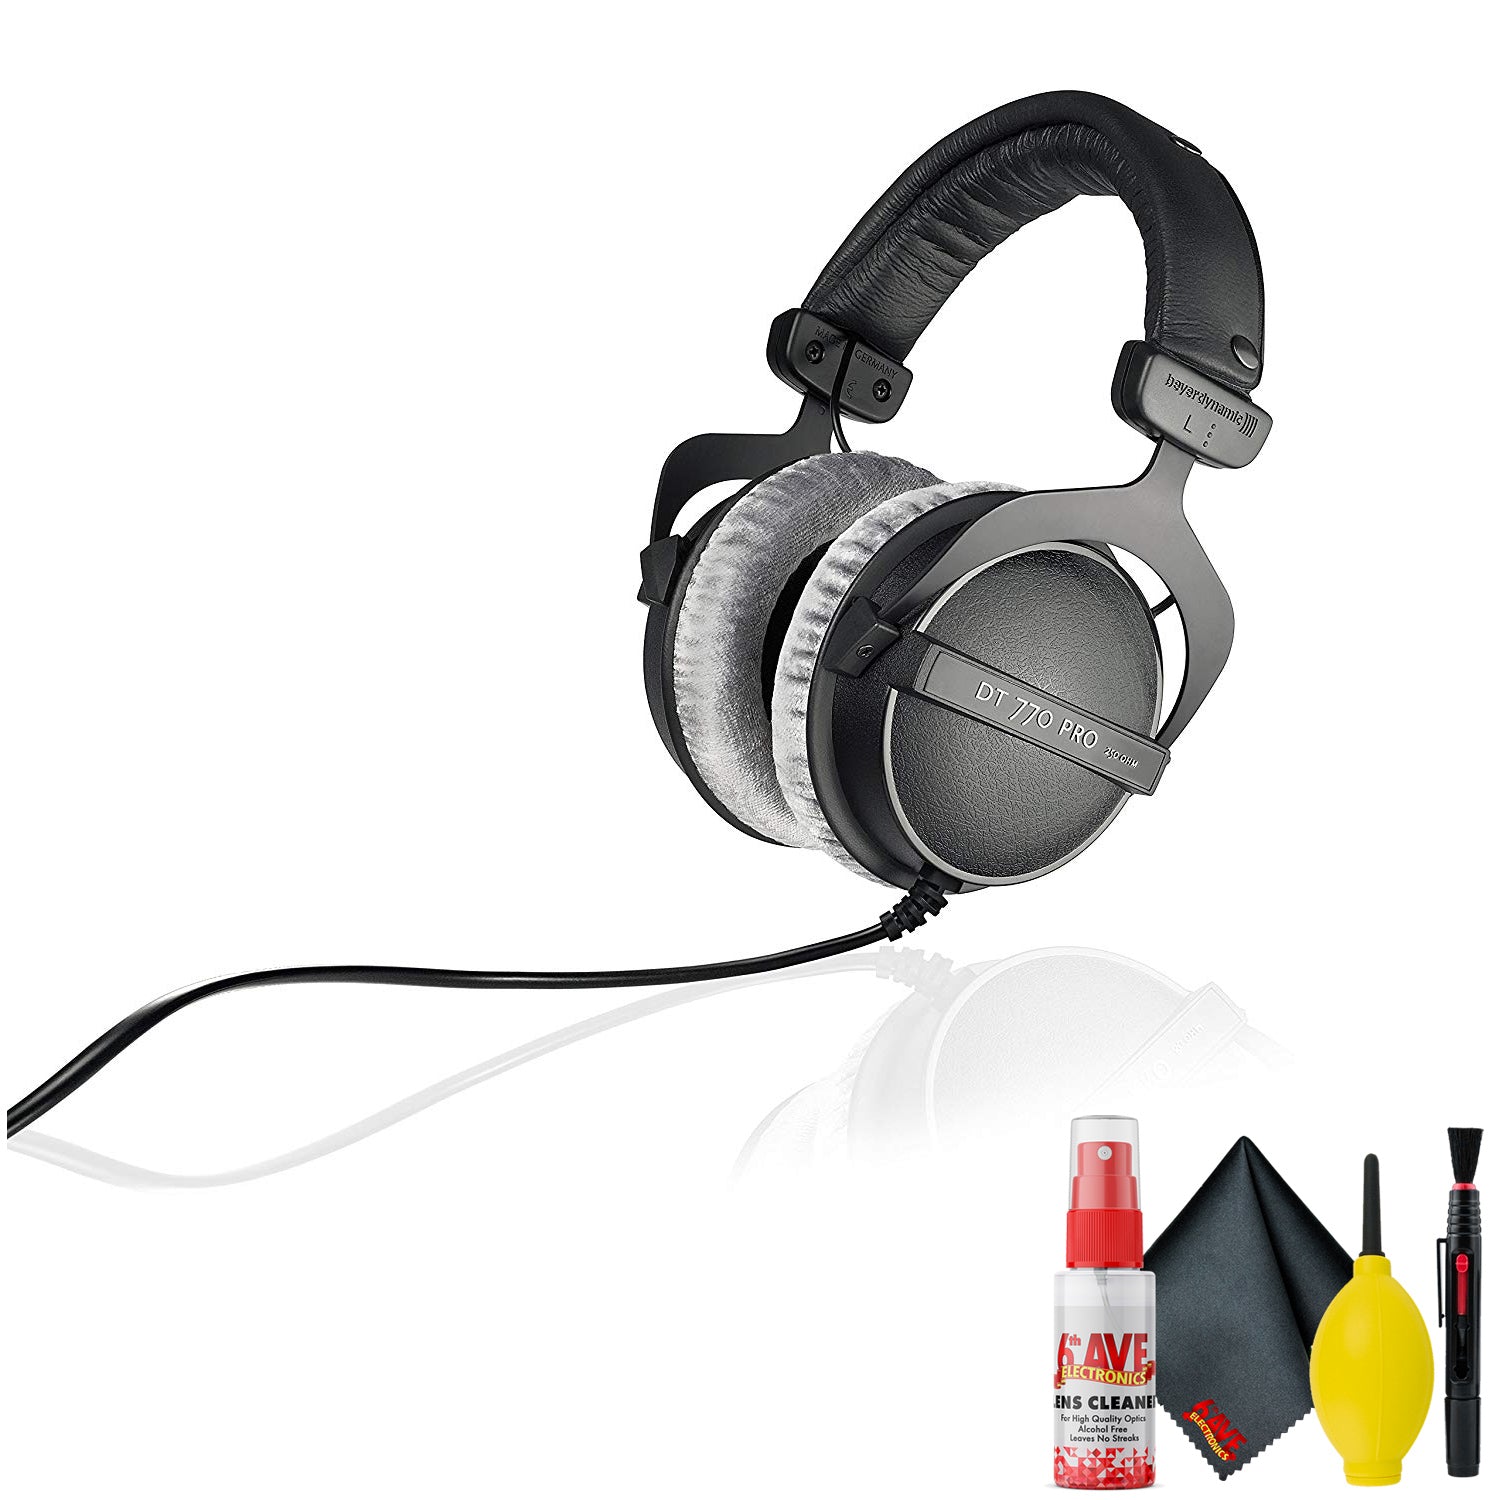 Beyerdynamic DT 770 PRO 250 Ohm Studio Headphone - Goby Labs Headphone Cleaner - Microfiber Cleaning Cloth